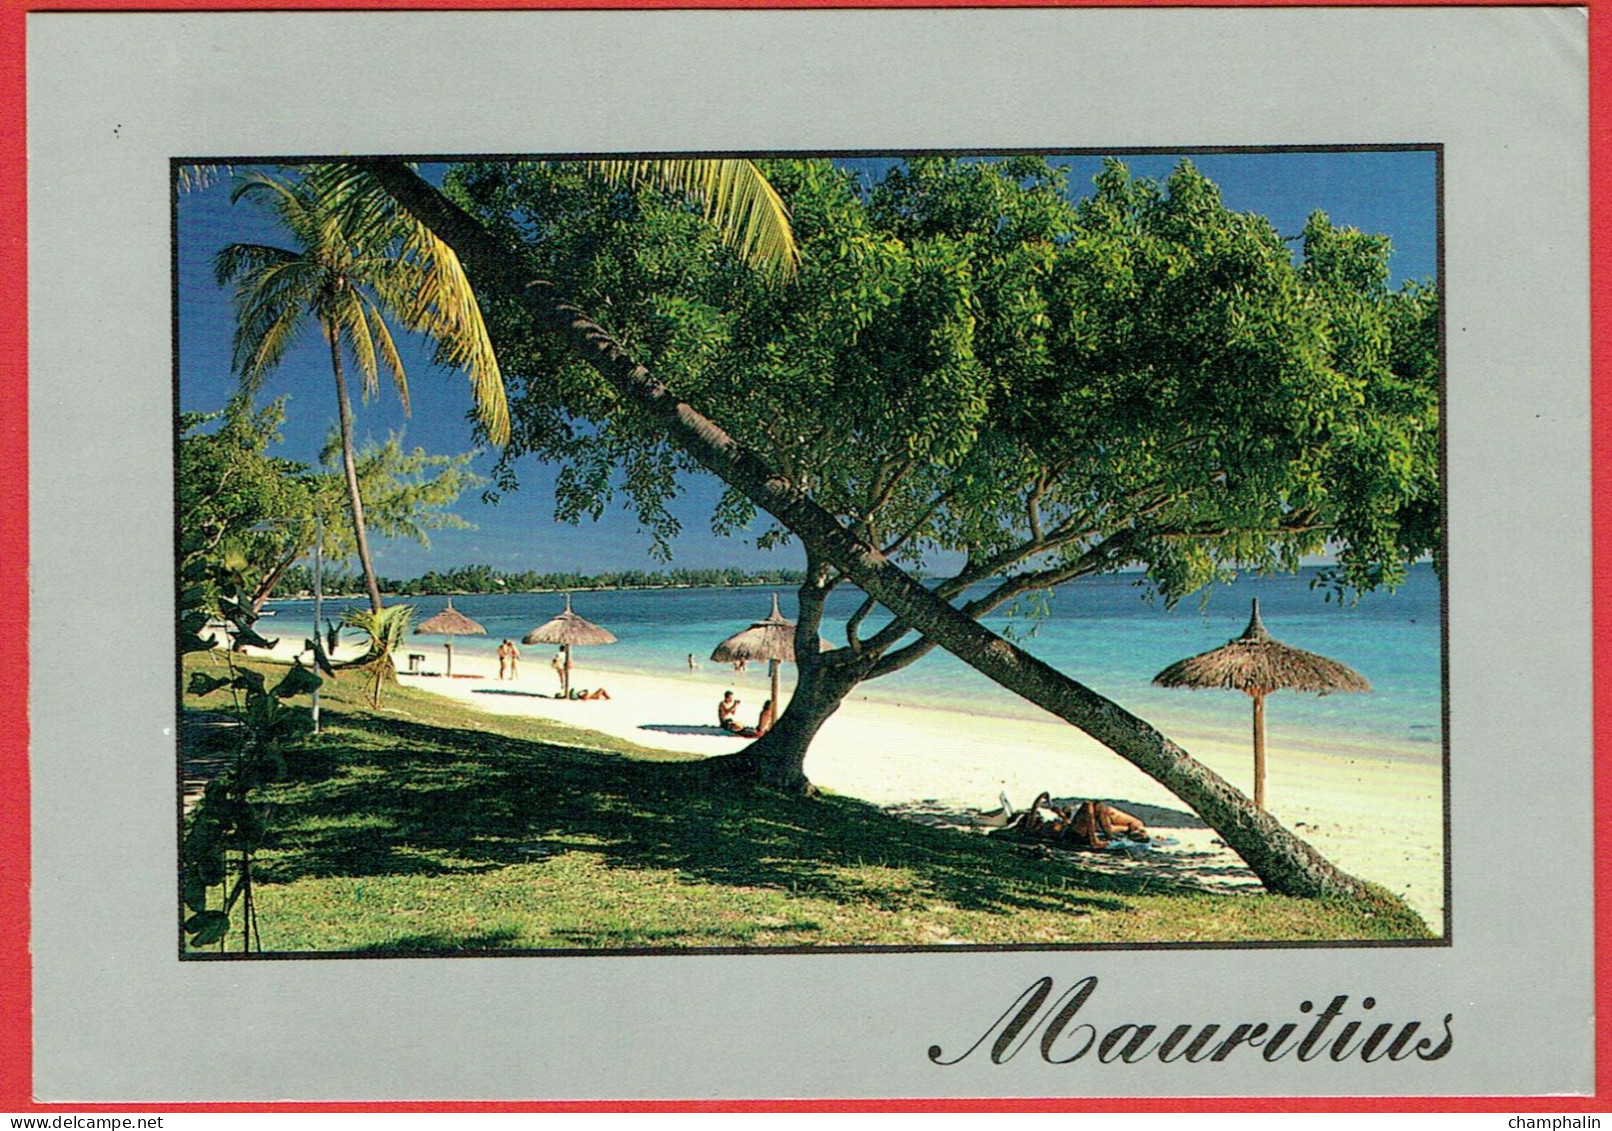 Ile Maurice - Mauritius - Trou Aux Biches - Maurice